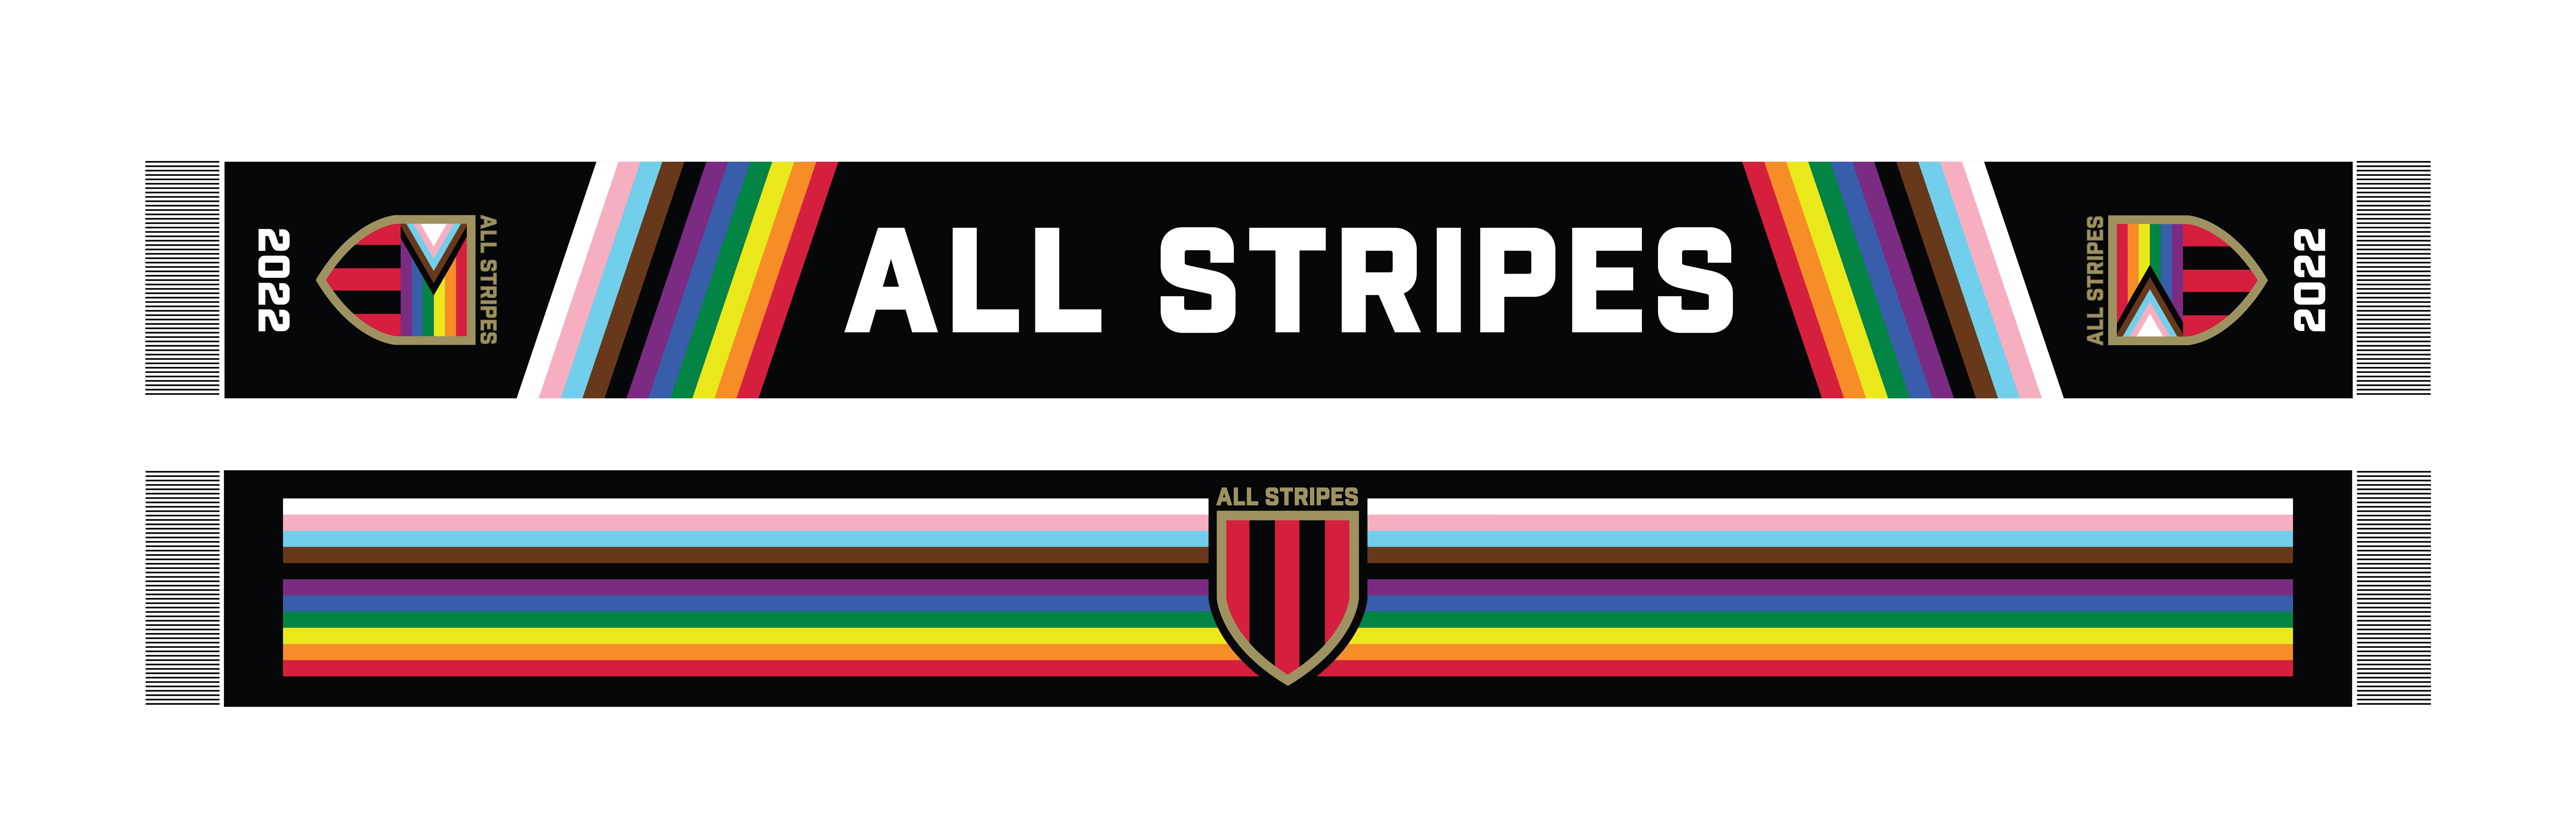 All Stripes 2022 Scarf